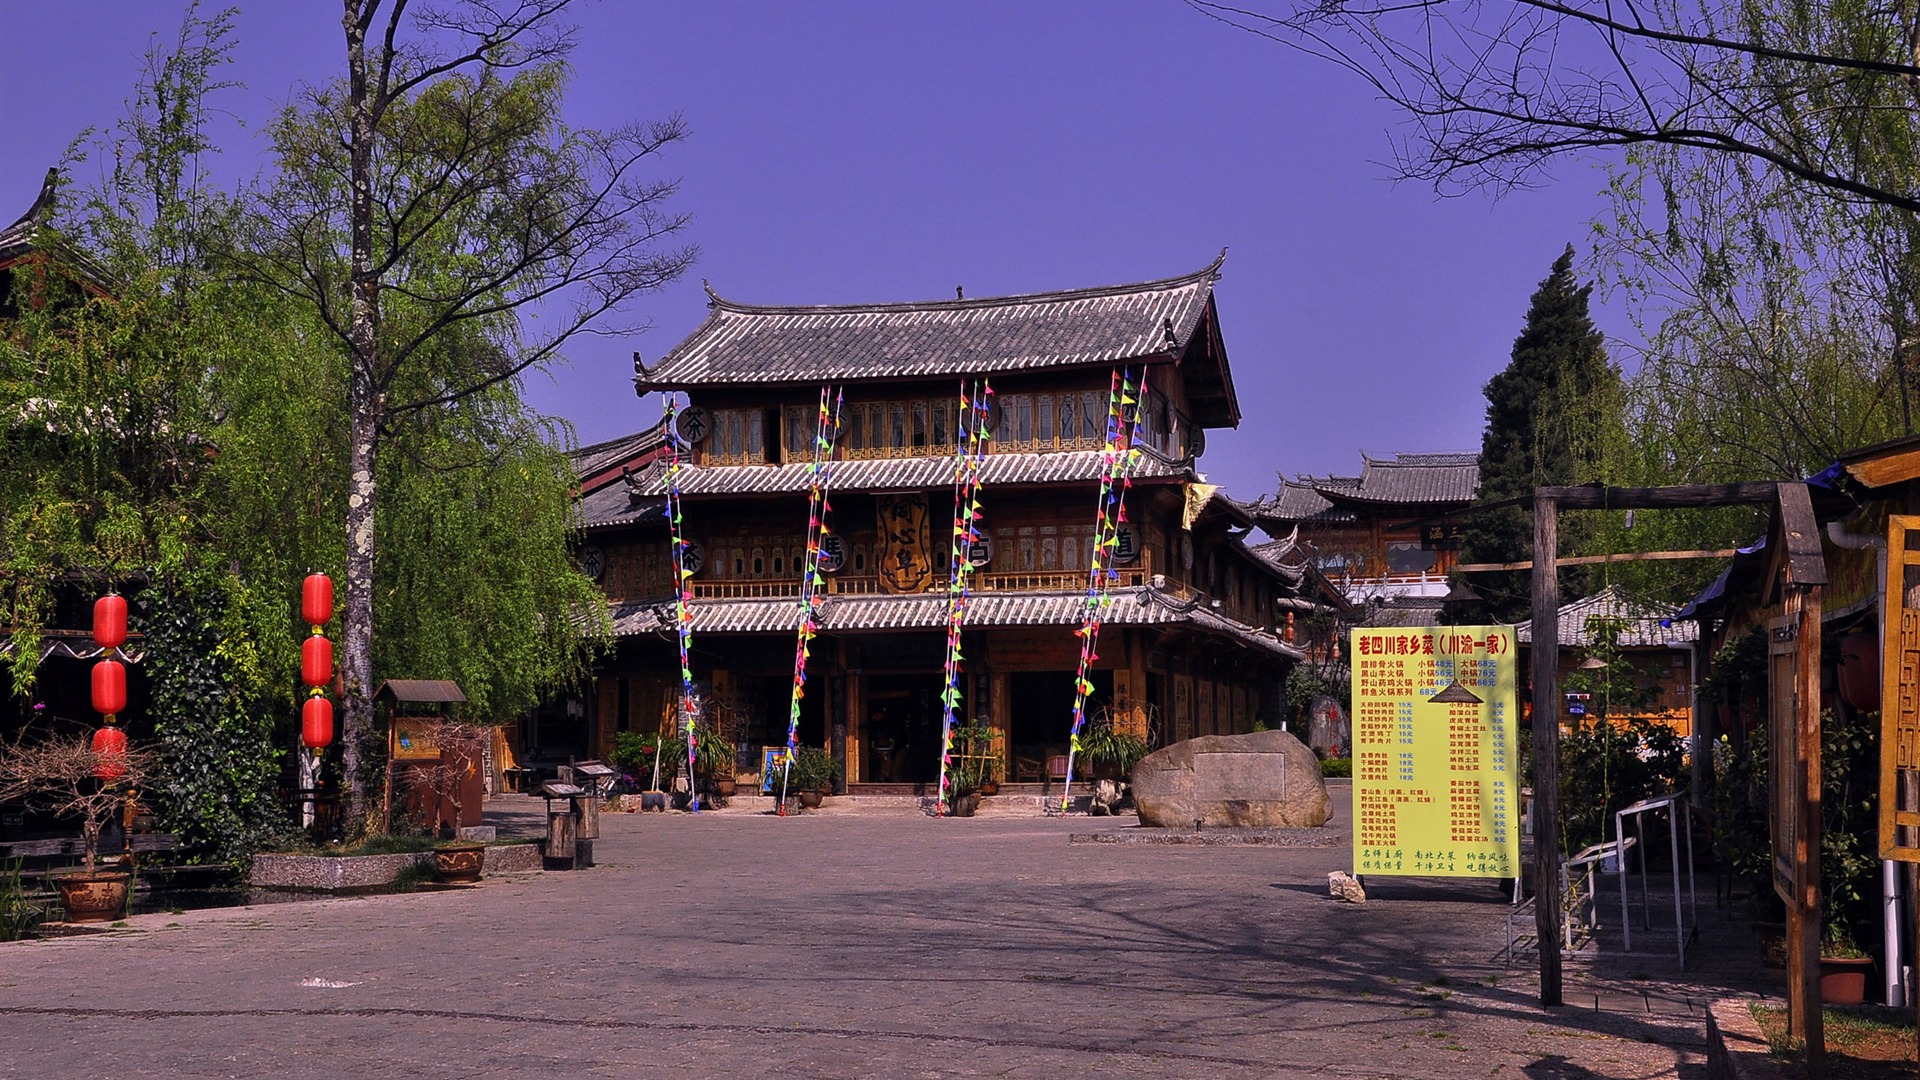 Lijiang ancient town atmosphere (2) (old Hong OK works) #18 - 1920x1080